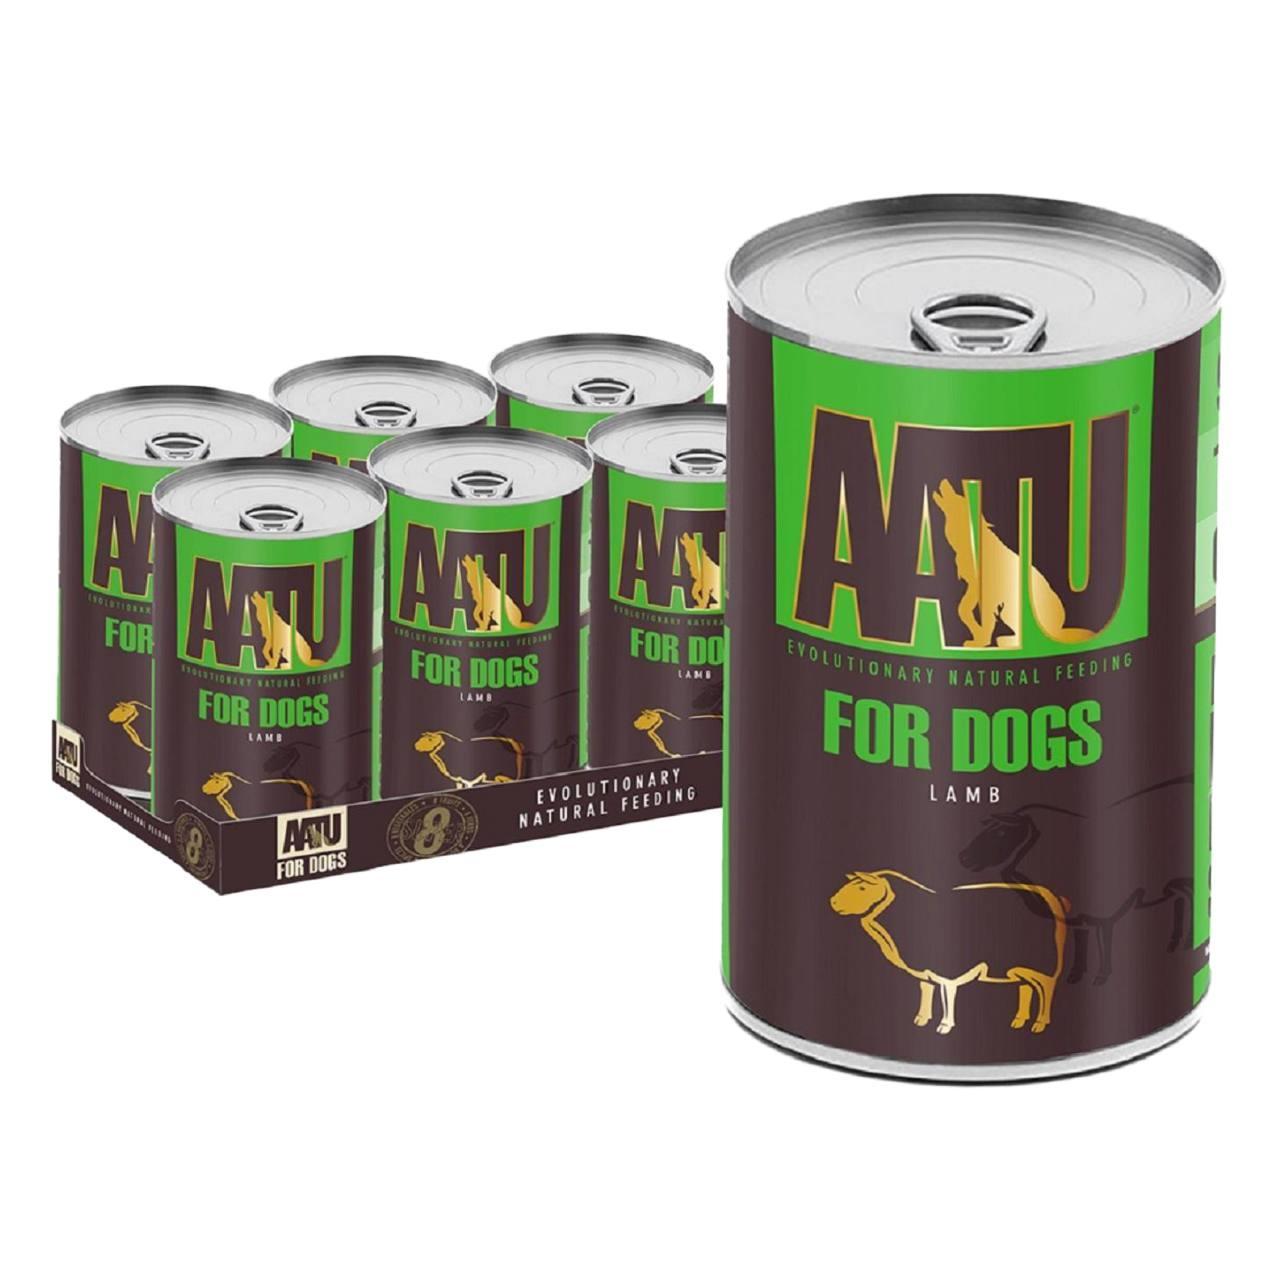 An image of AATU For Dogs Lamb Tins